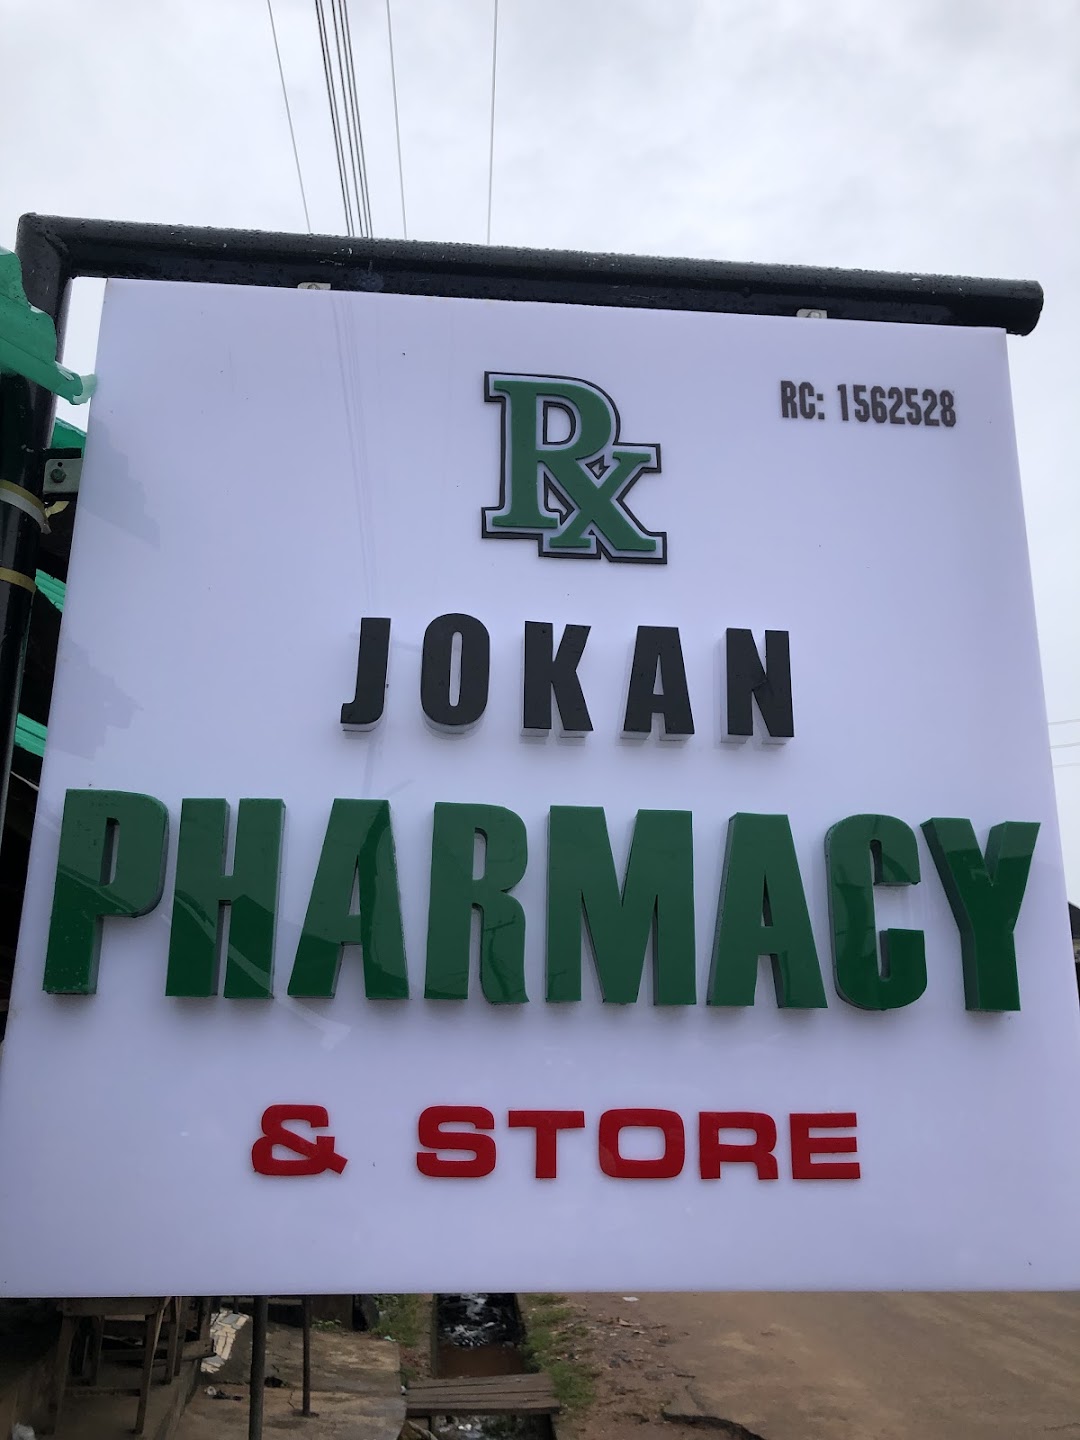 Jokan Pharmacy